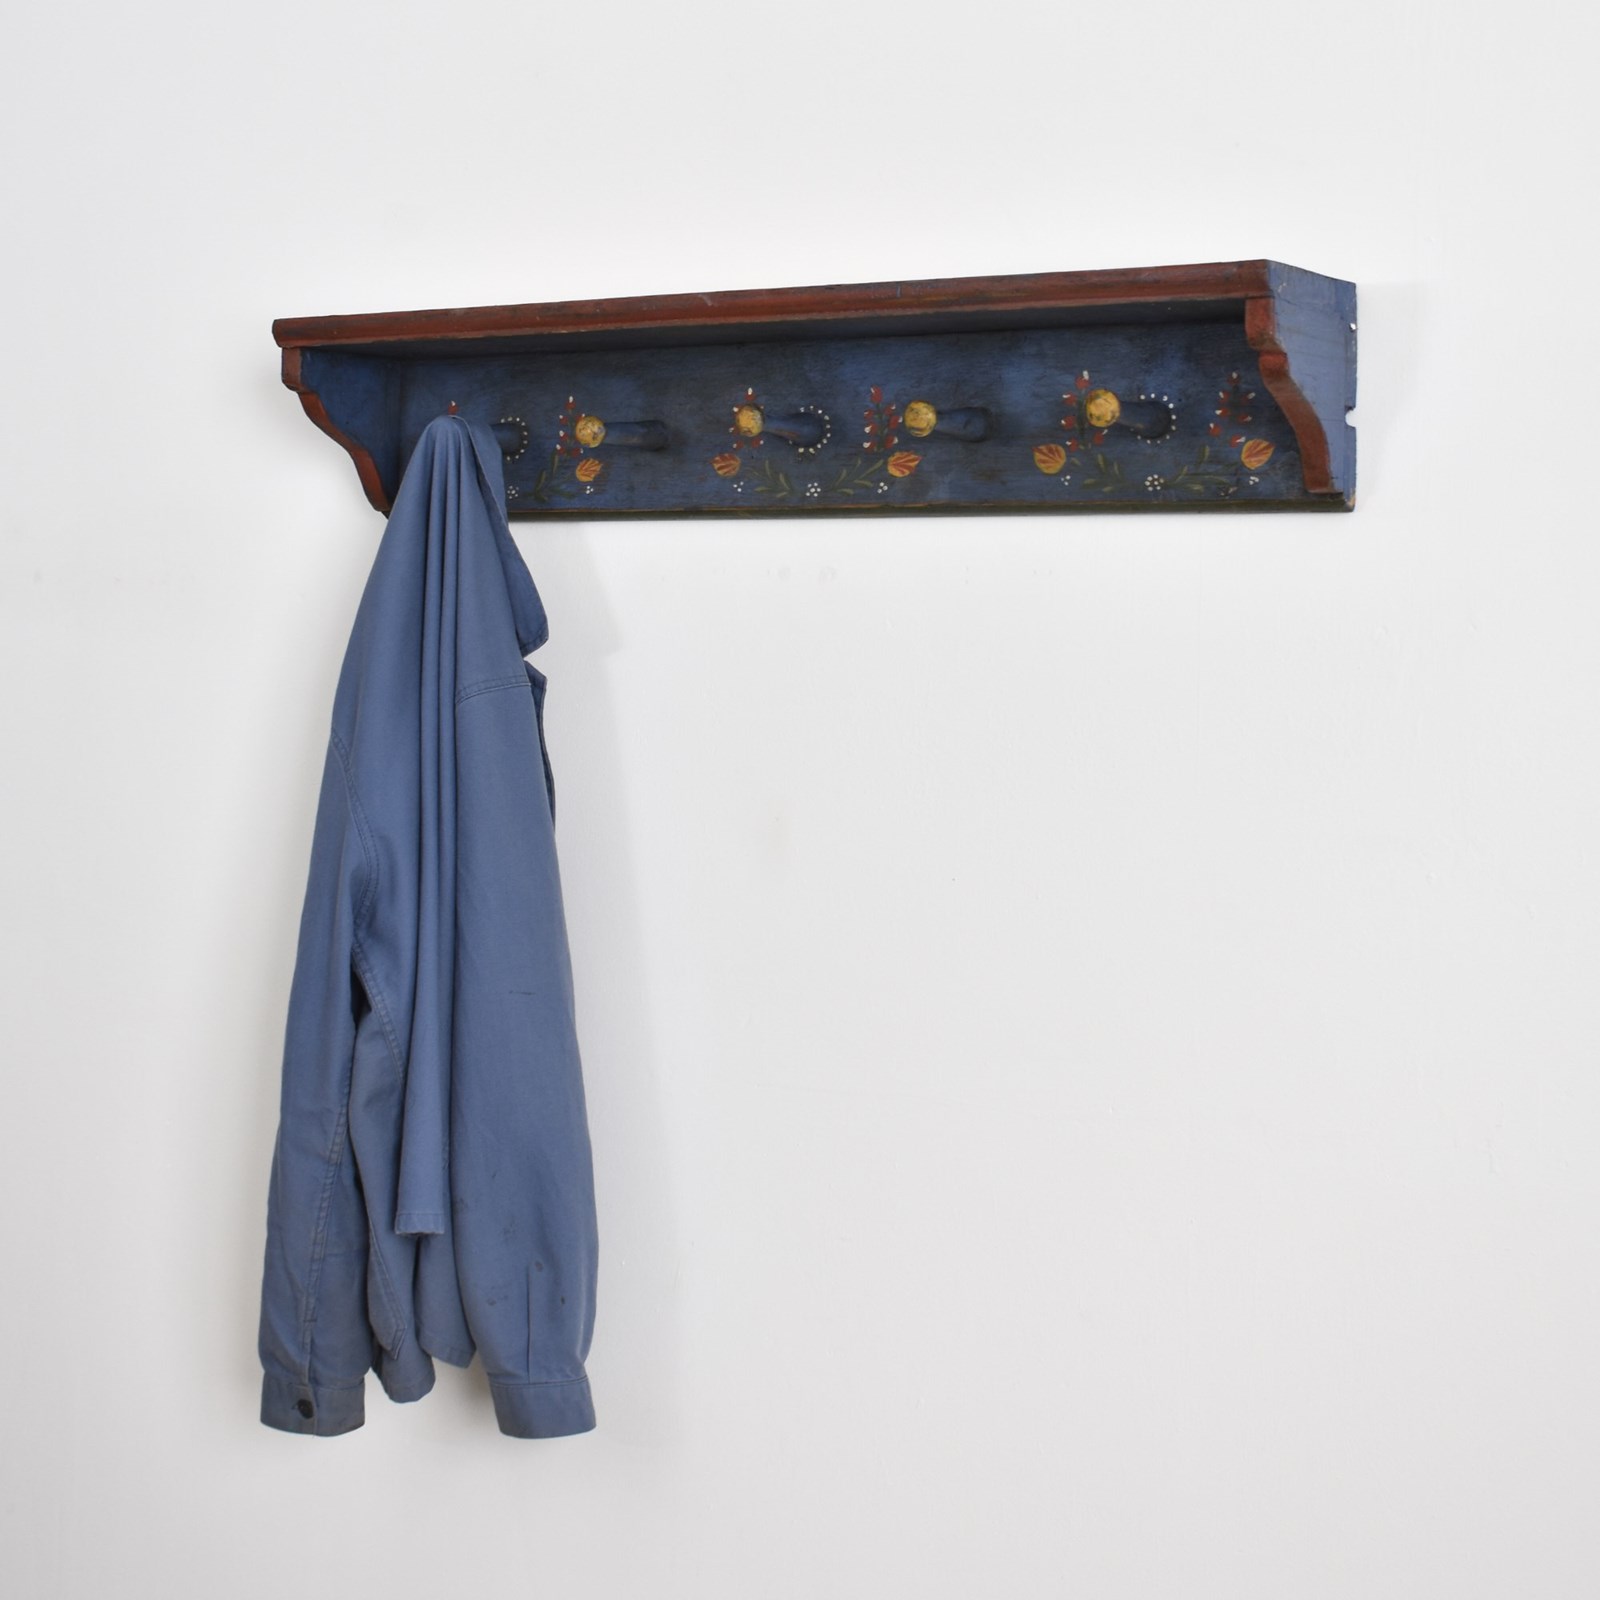 Rustic Painted Peg Coat Hook Rack With Shelf- A